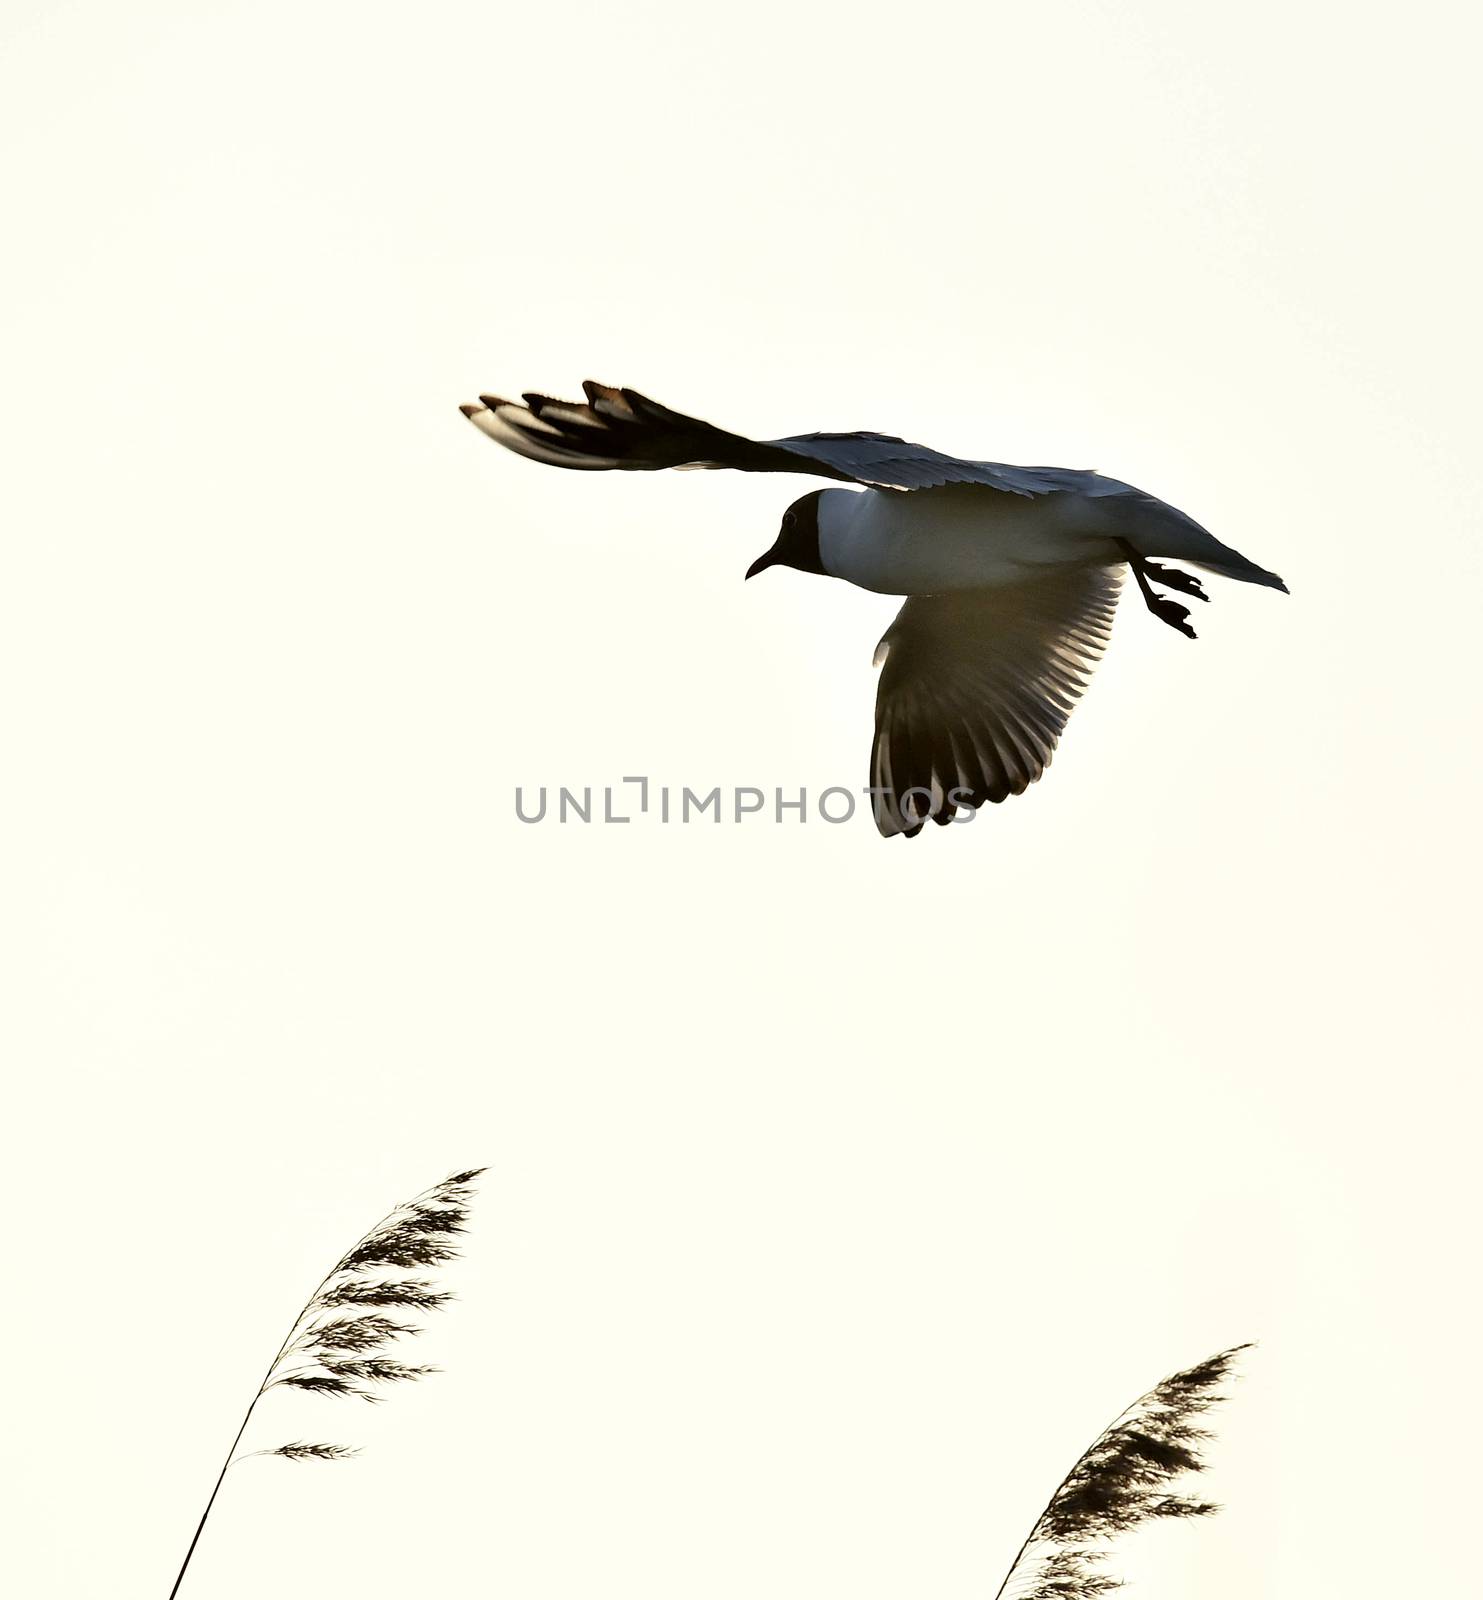 Adult black-headed gulls in flight, by SURZ